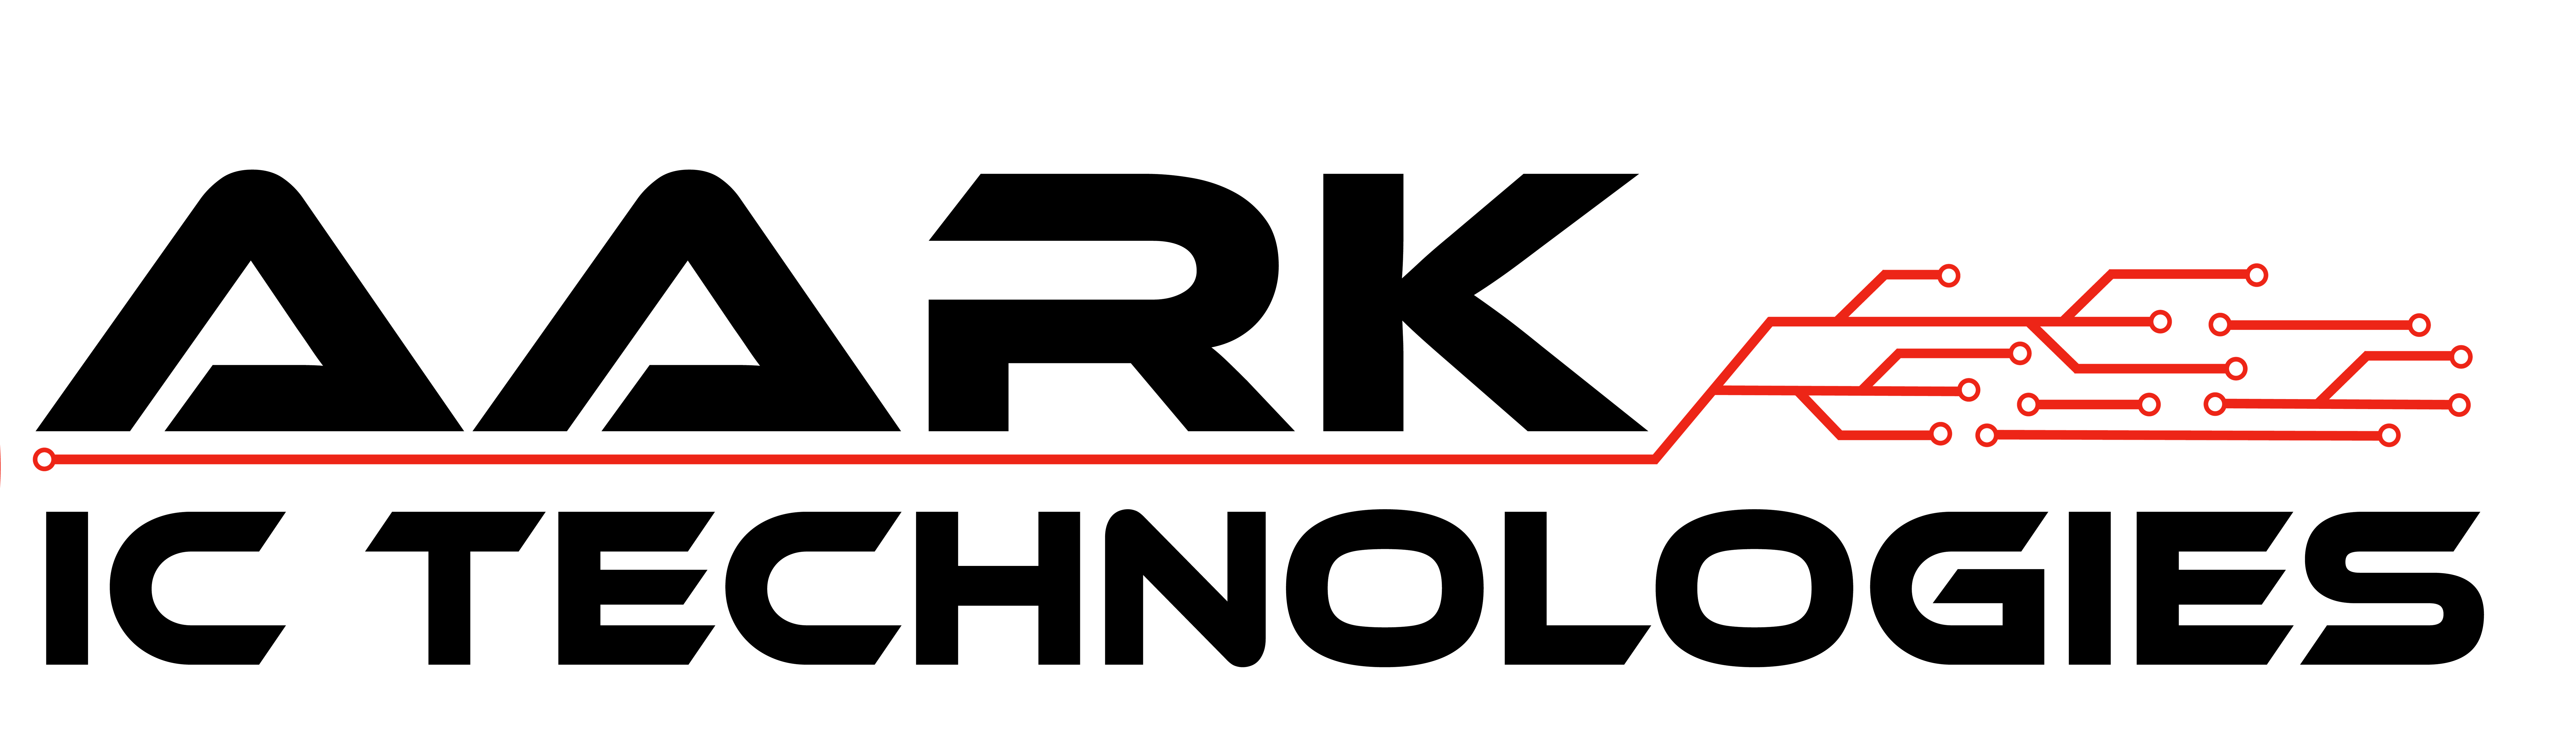 aark logo